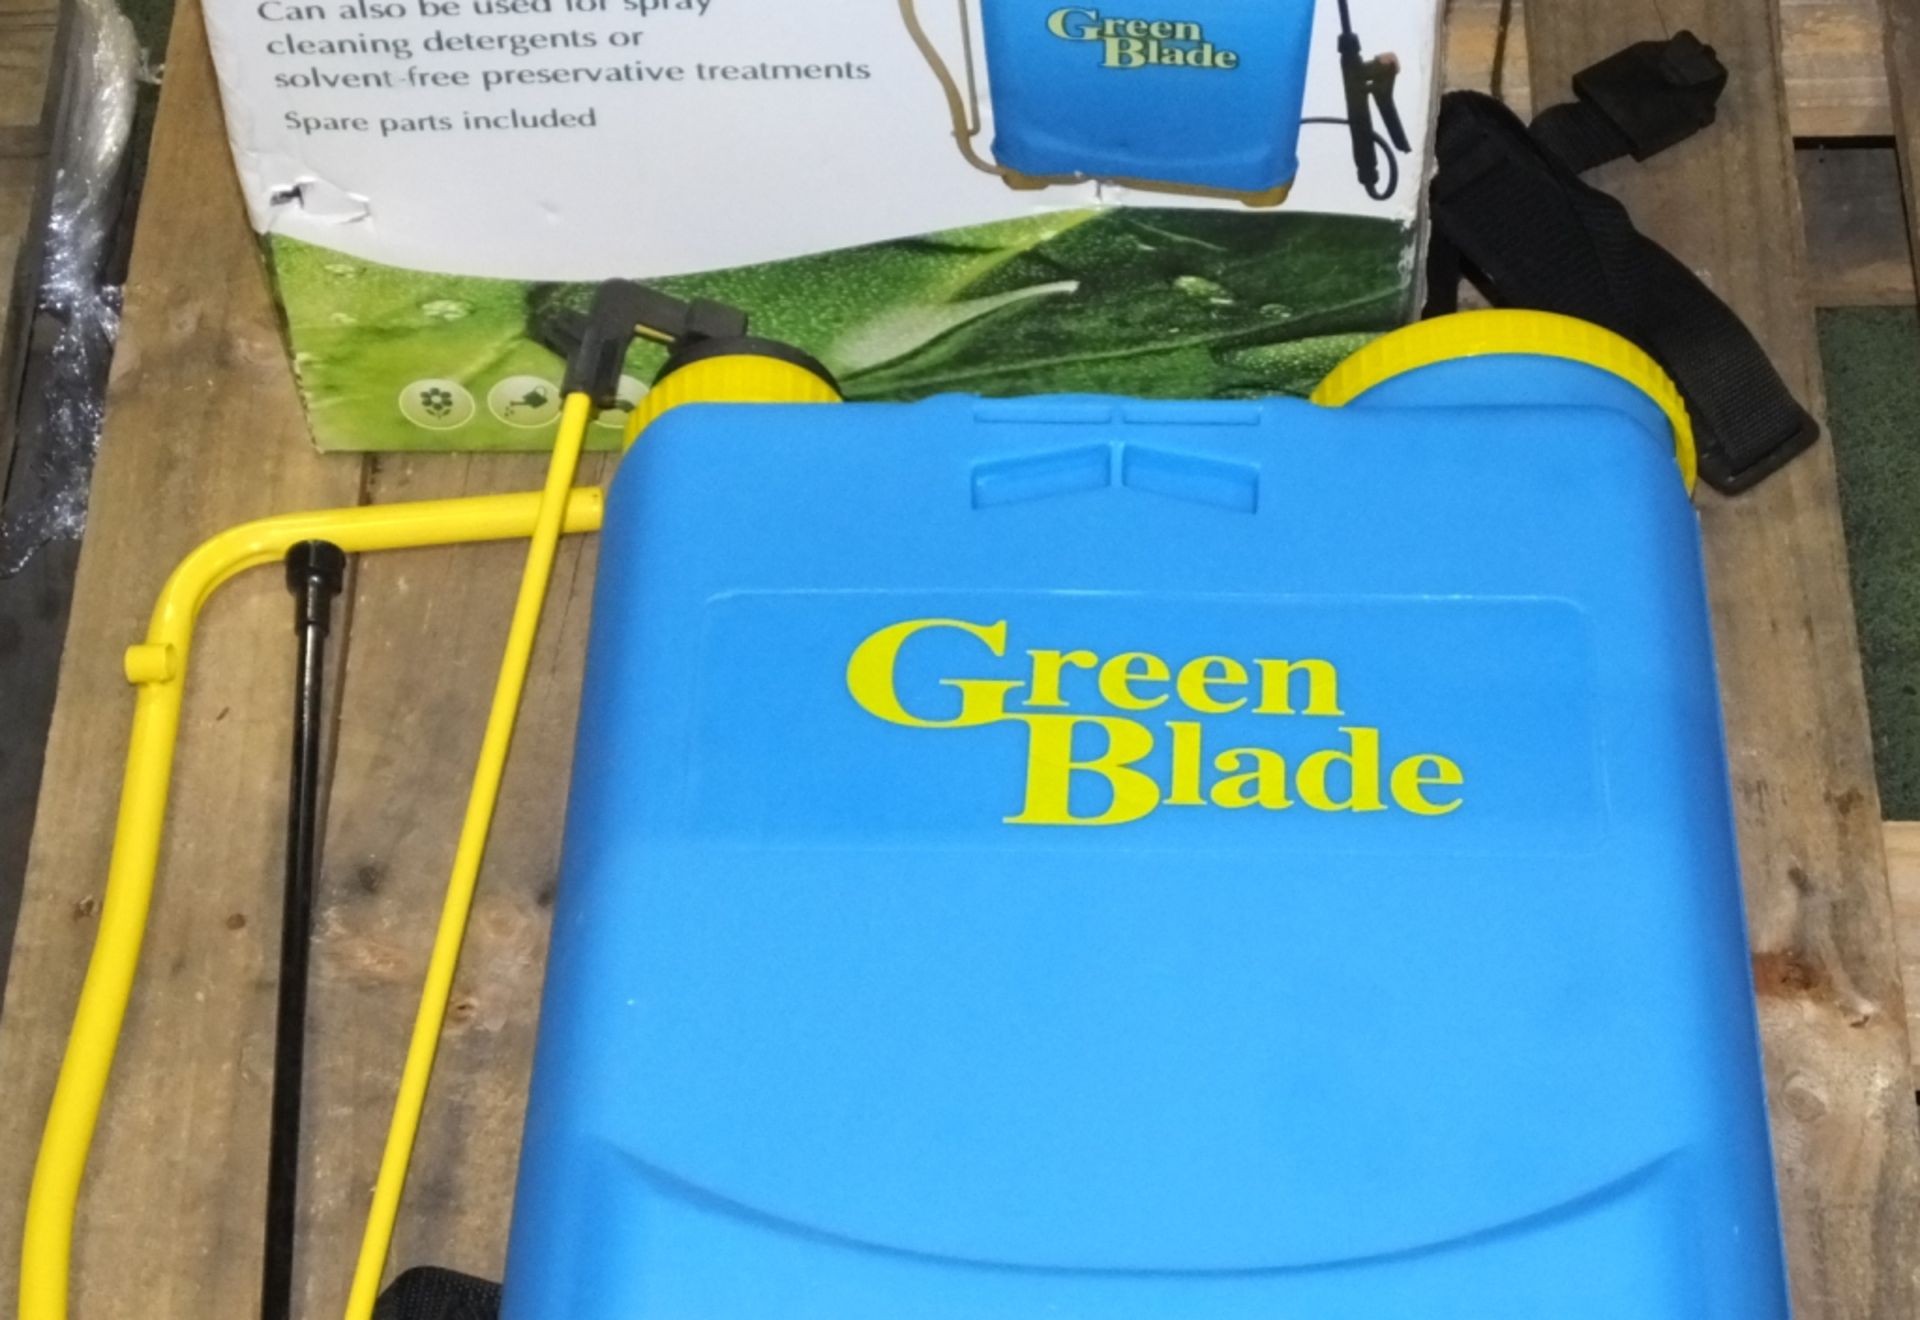 Green Blade 20 Litre Knapsack Sprayer with spares - Image 2 of 4